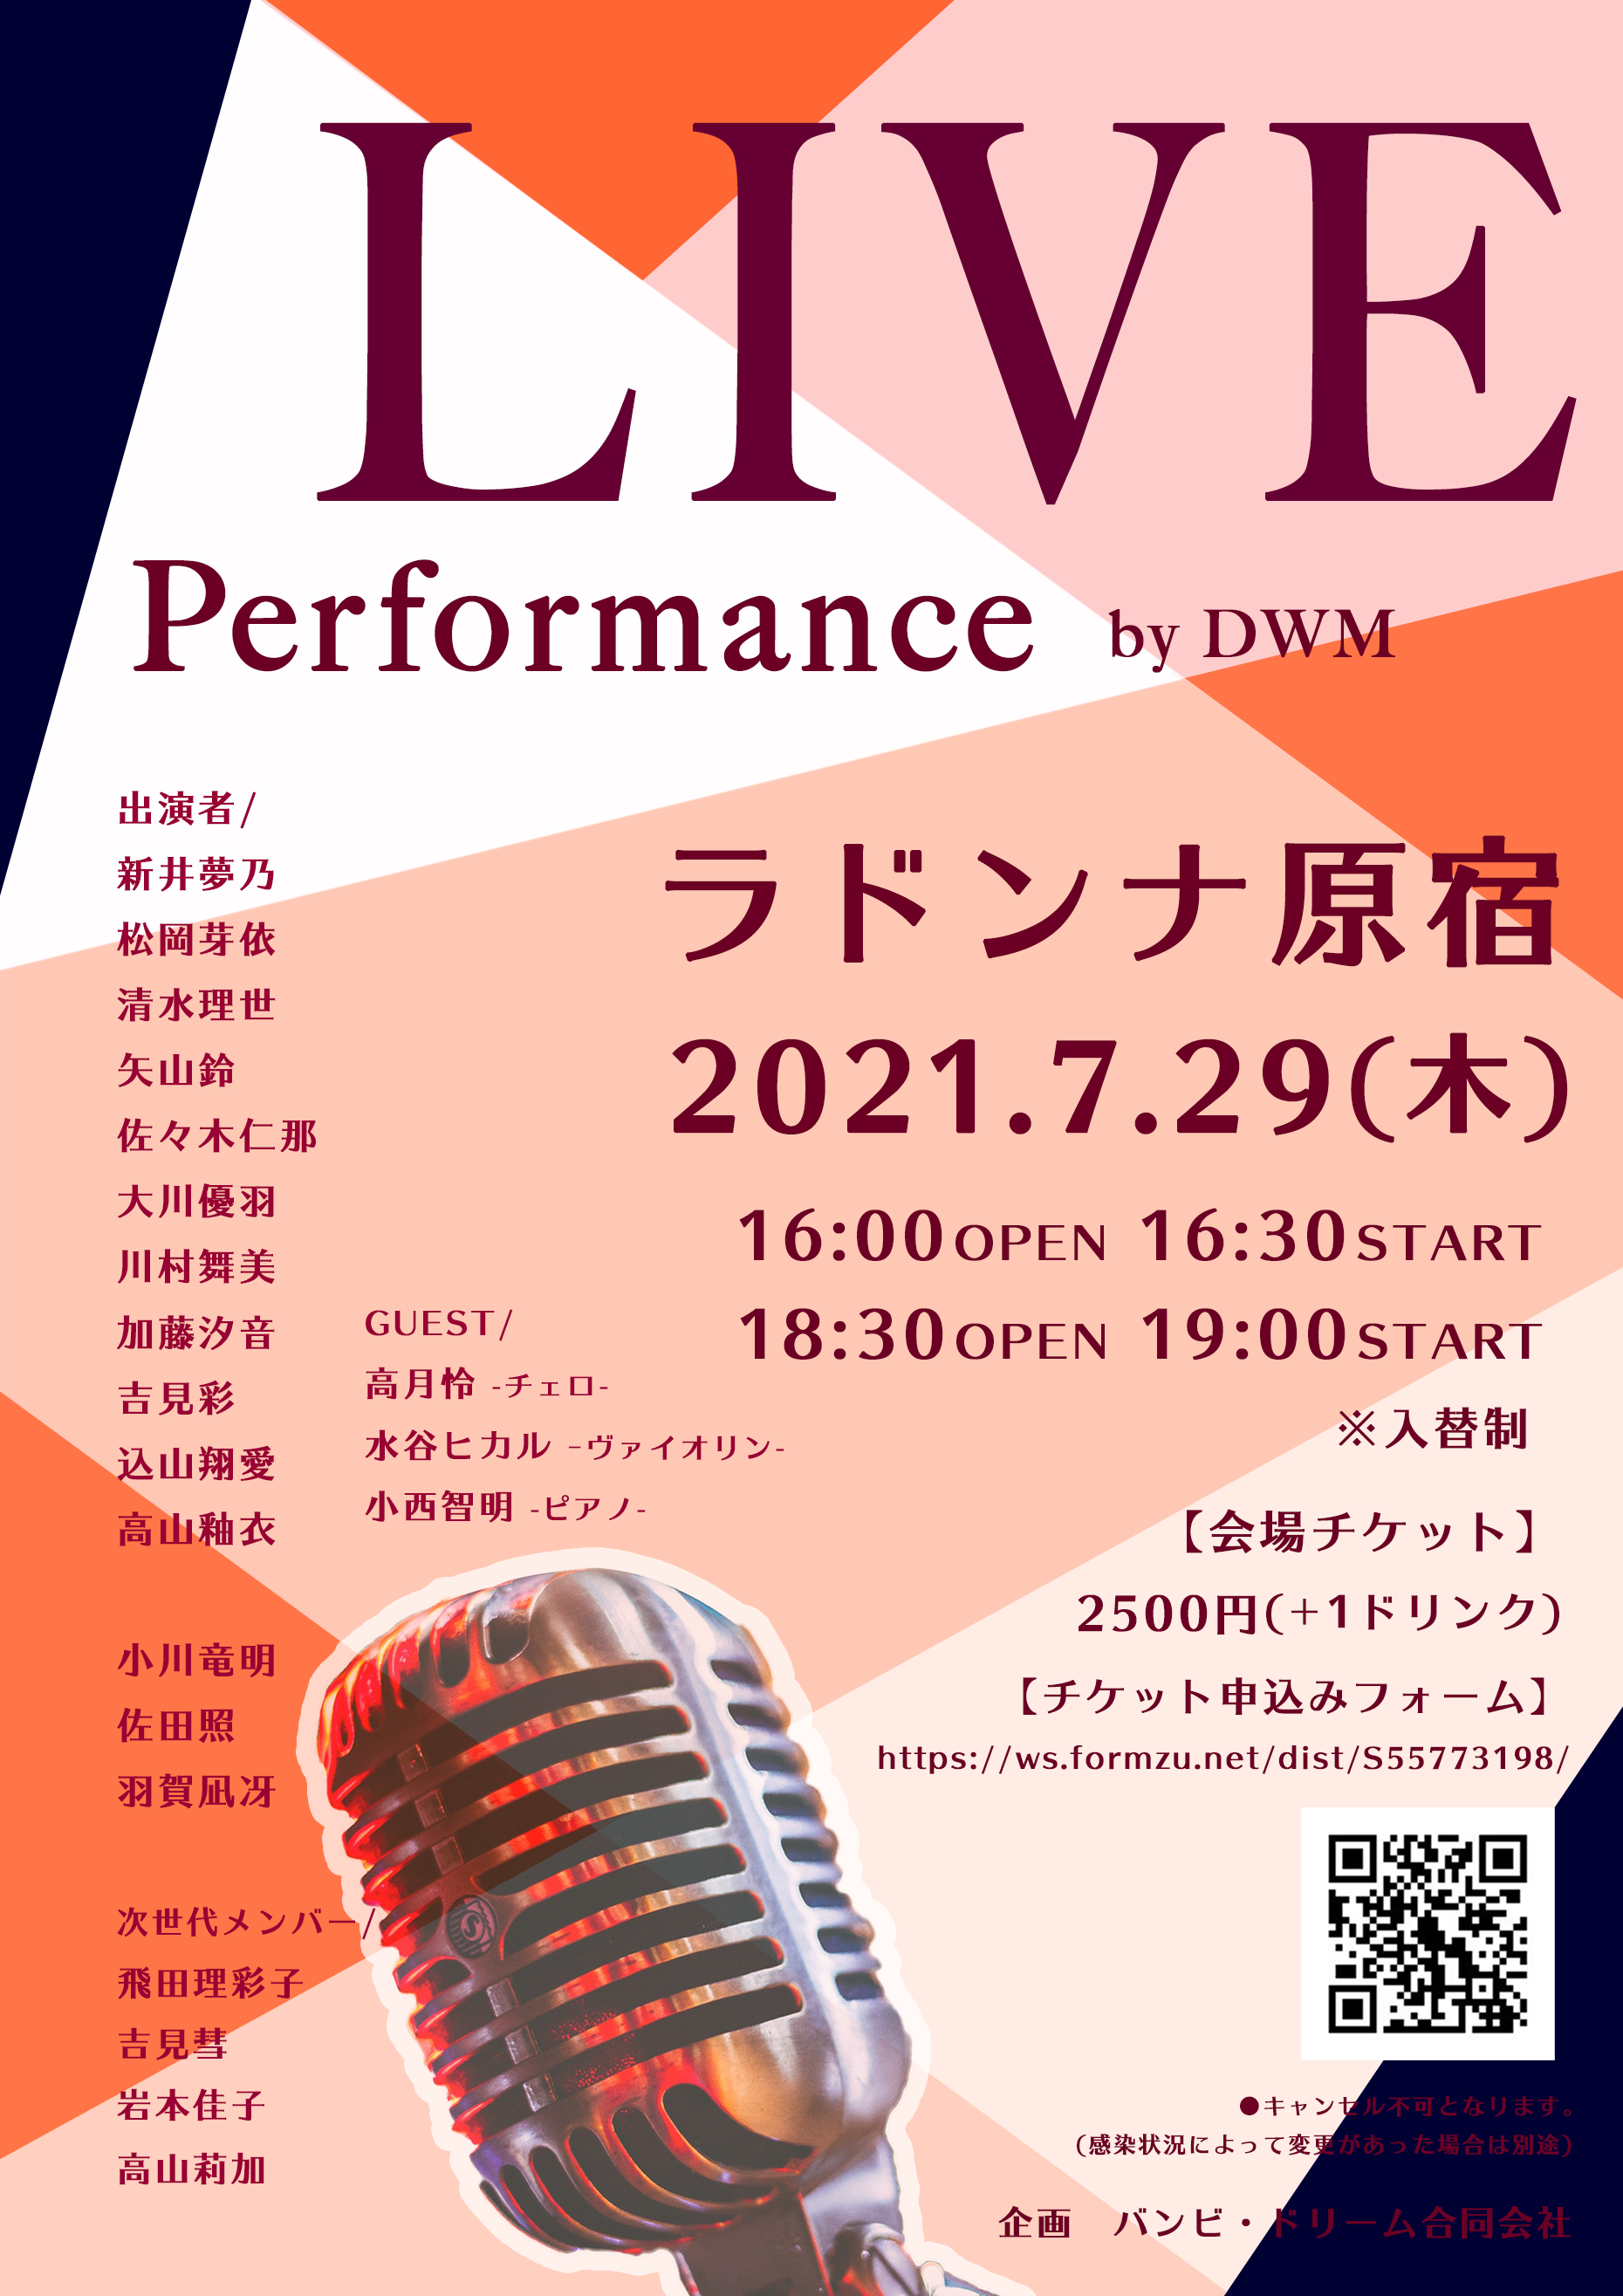 LIVE Performance by DWM